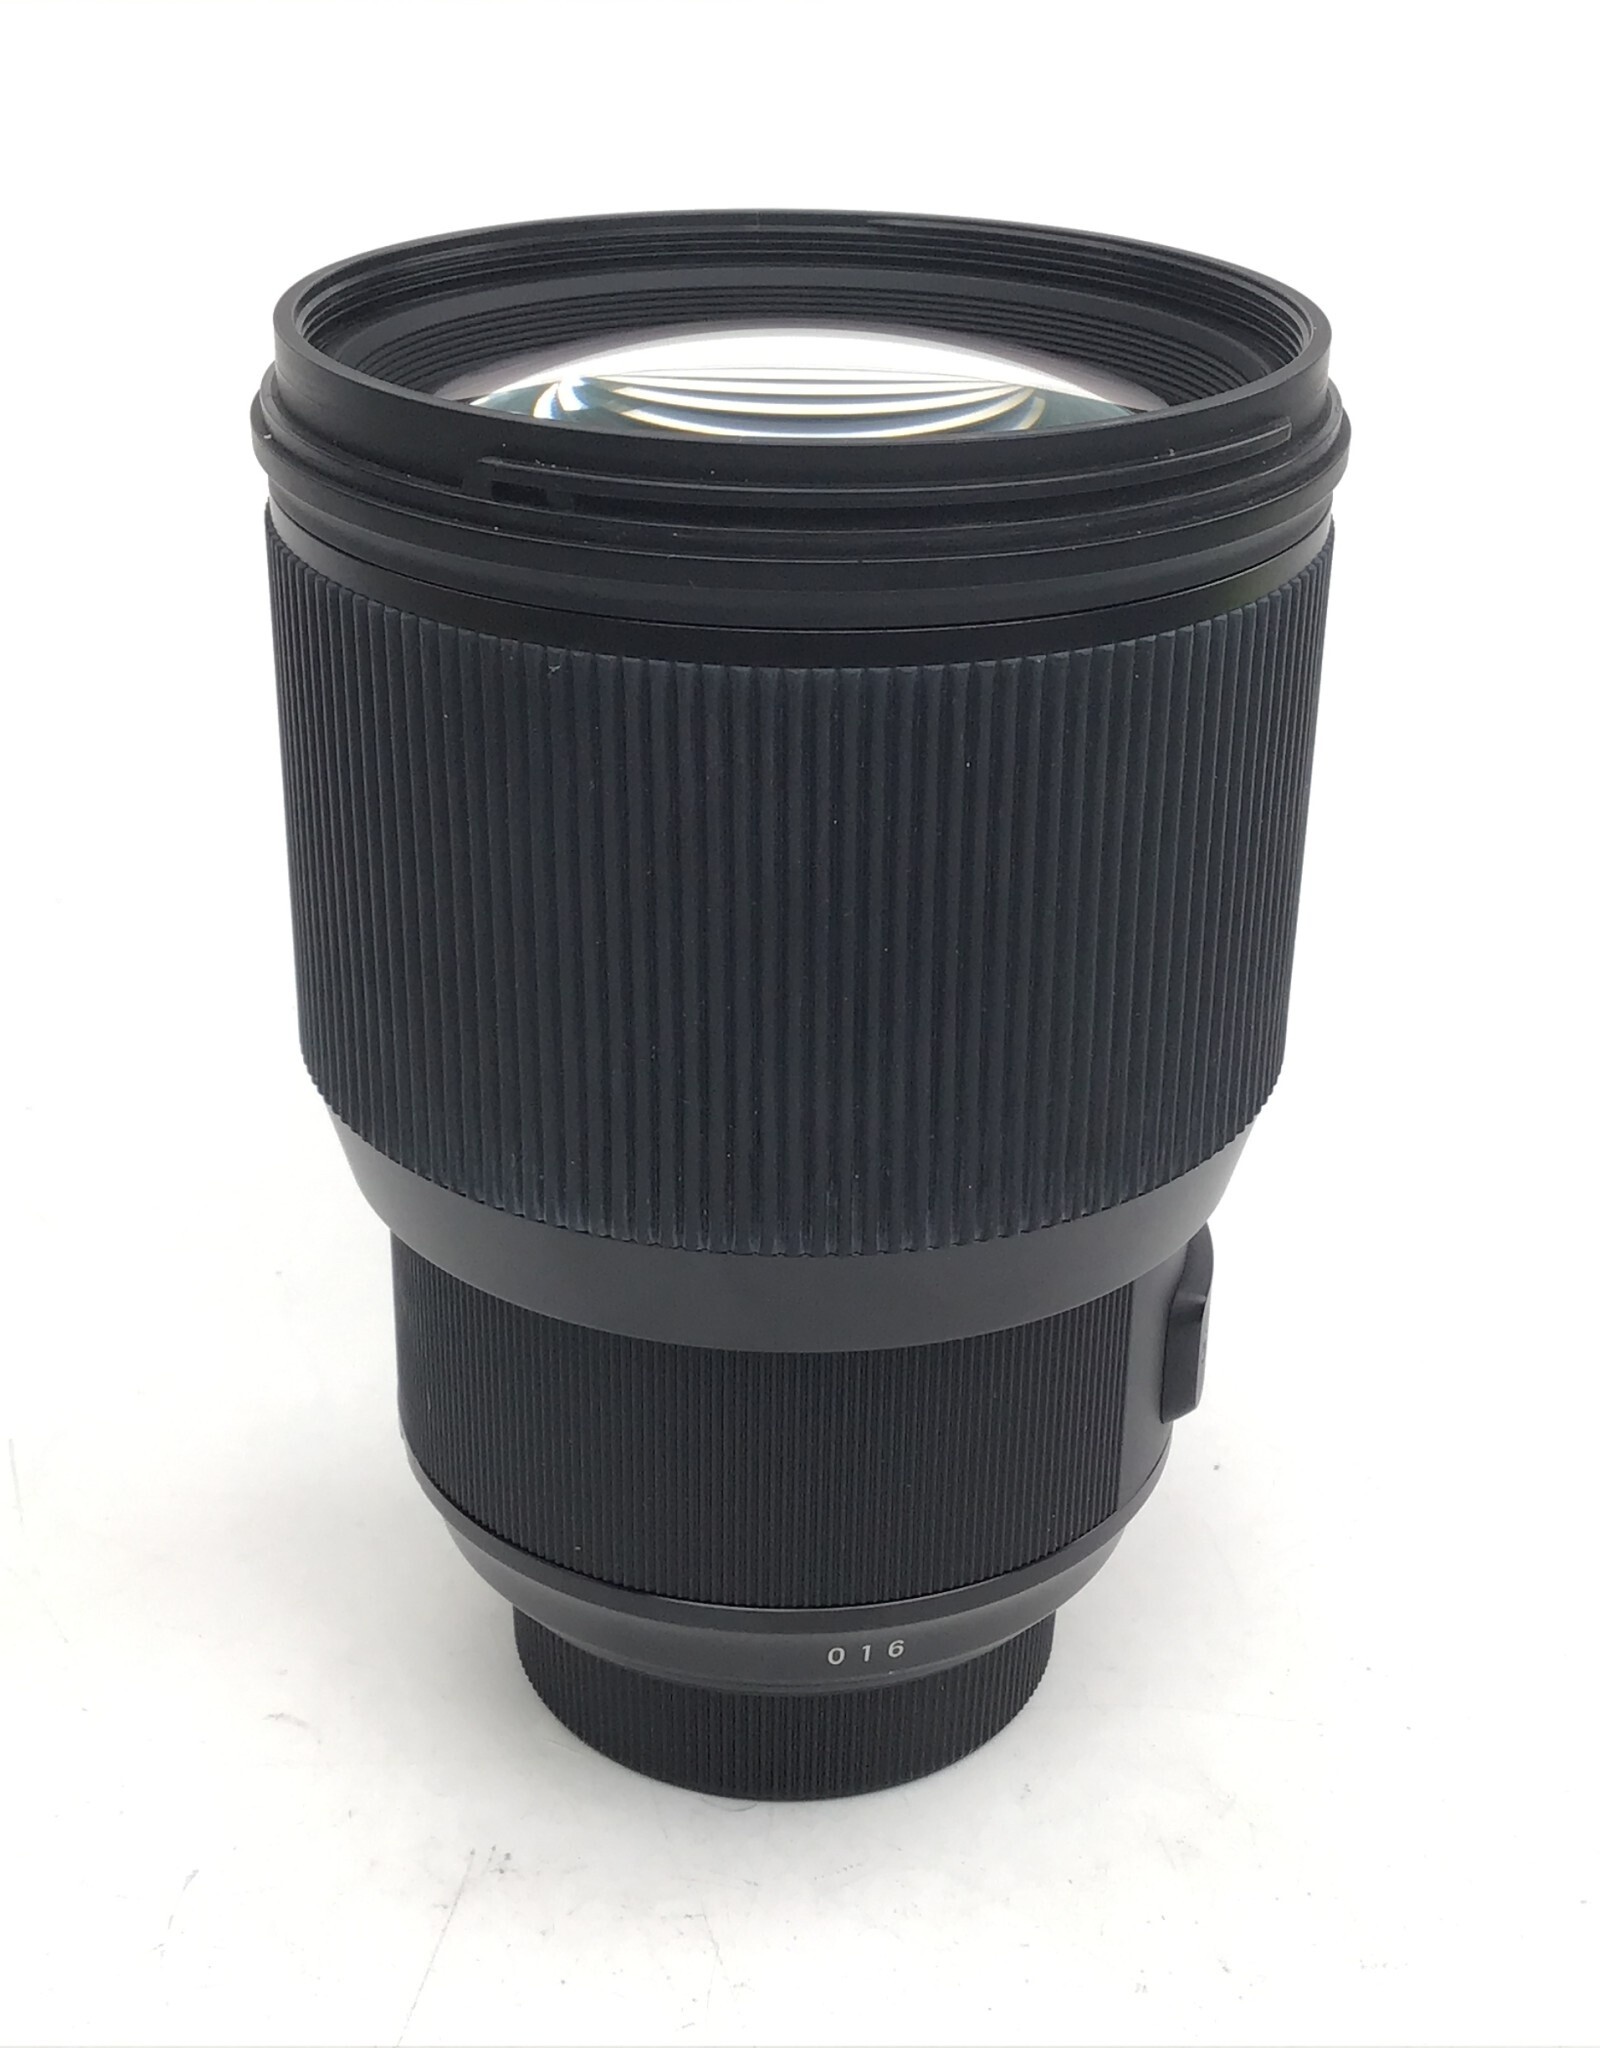 NIKON Sigma Art 85mm f1.4 DG Lens for Nikon Used Good